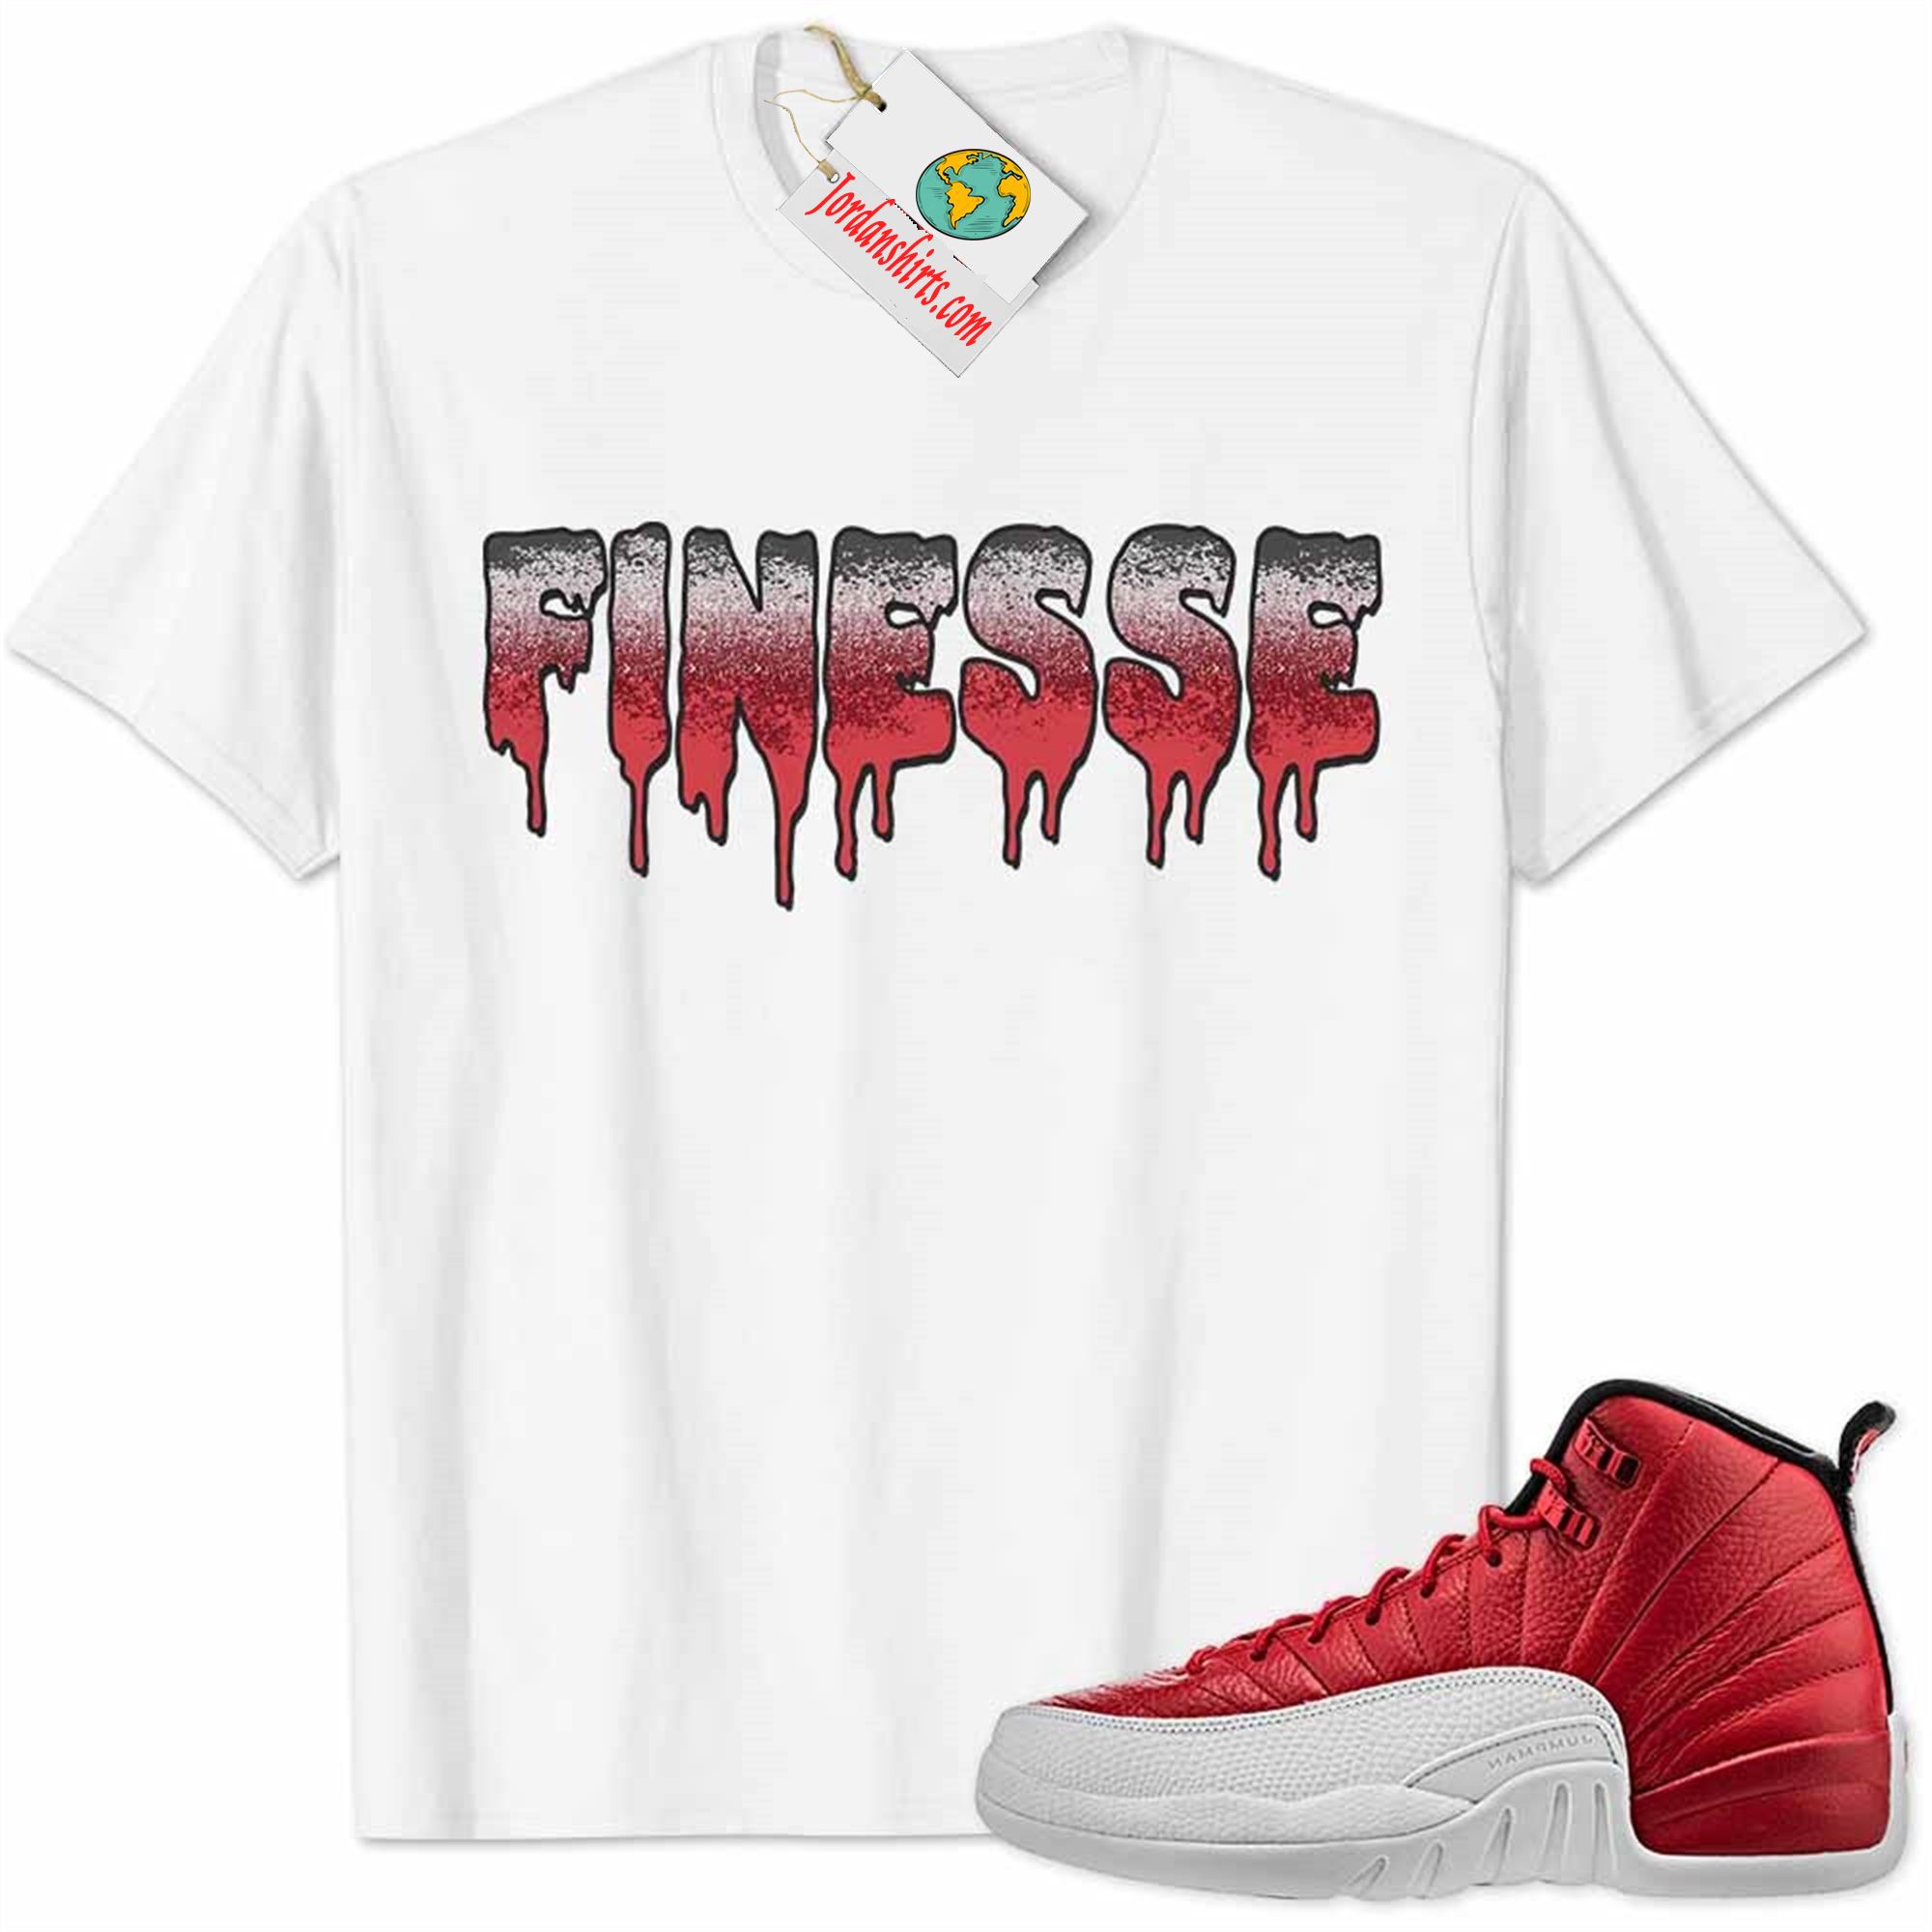 Jordan 12 Shirt, Jordan 12 Gym Red Shirt Finesse Drip White Size Up To 5xl